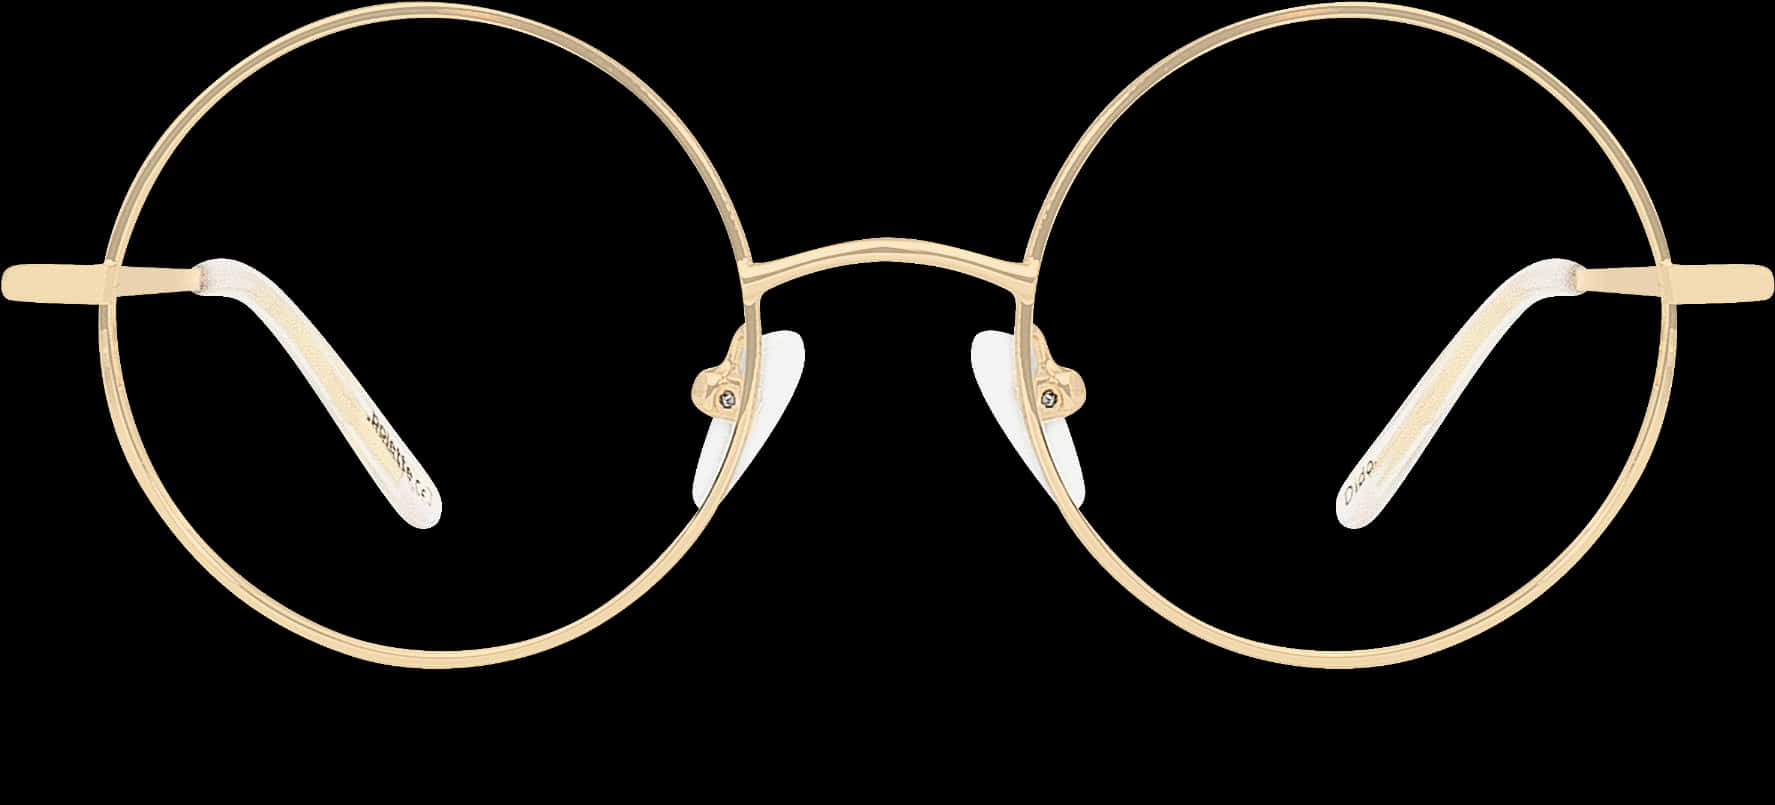 Golden Round Eyeglasses Black Background